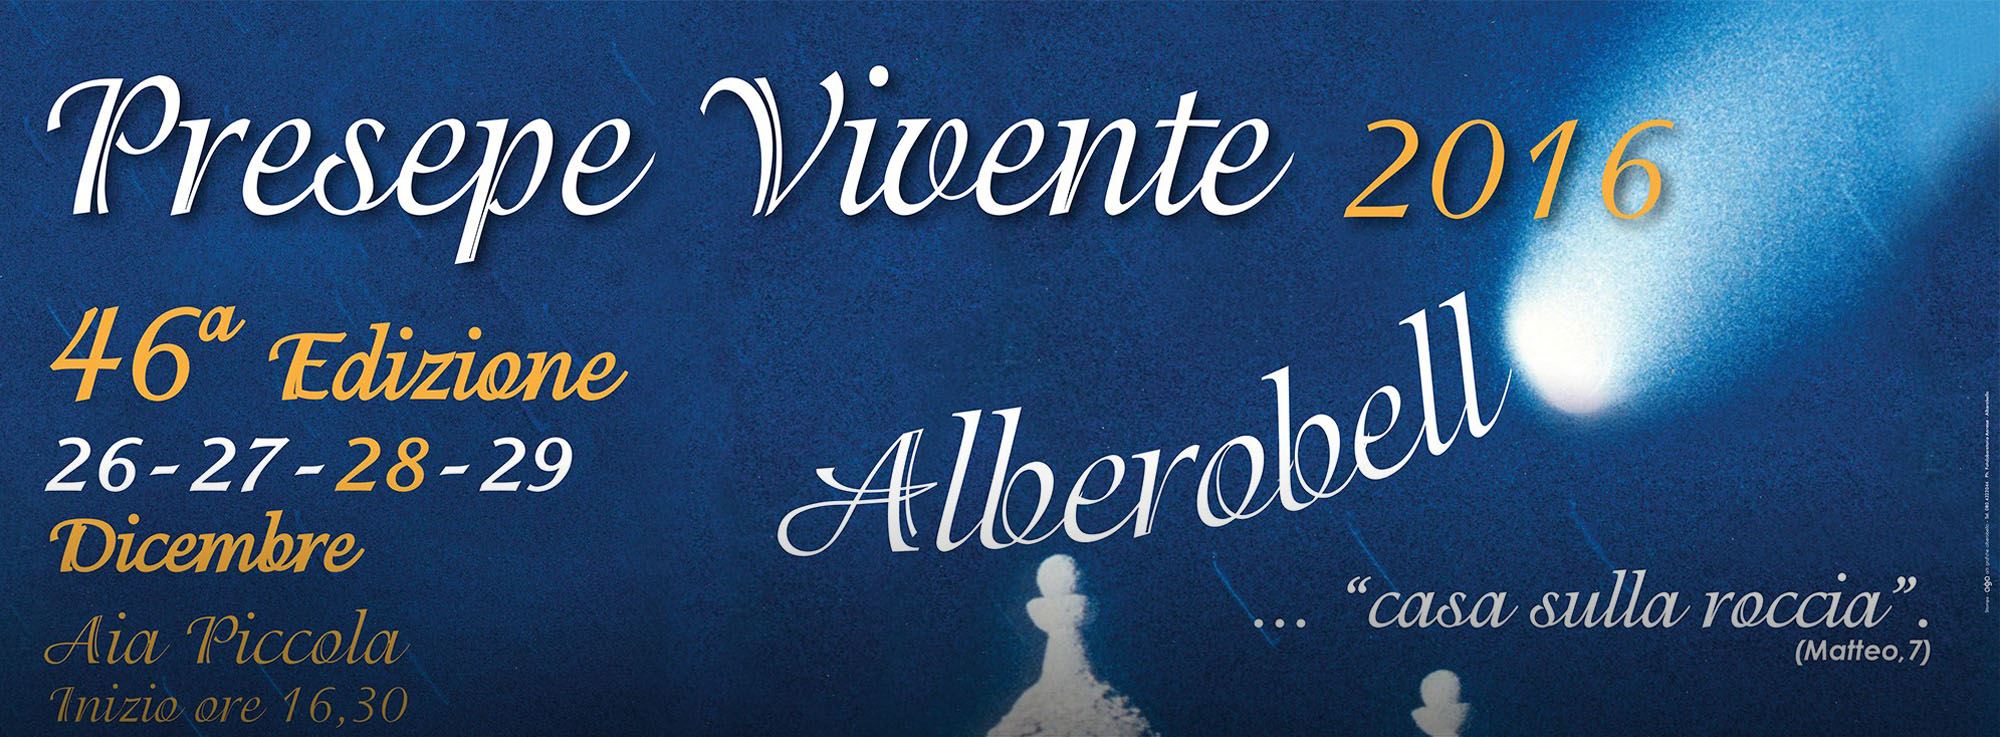 Alberobello: Presepe Vivente